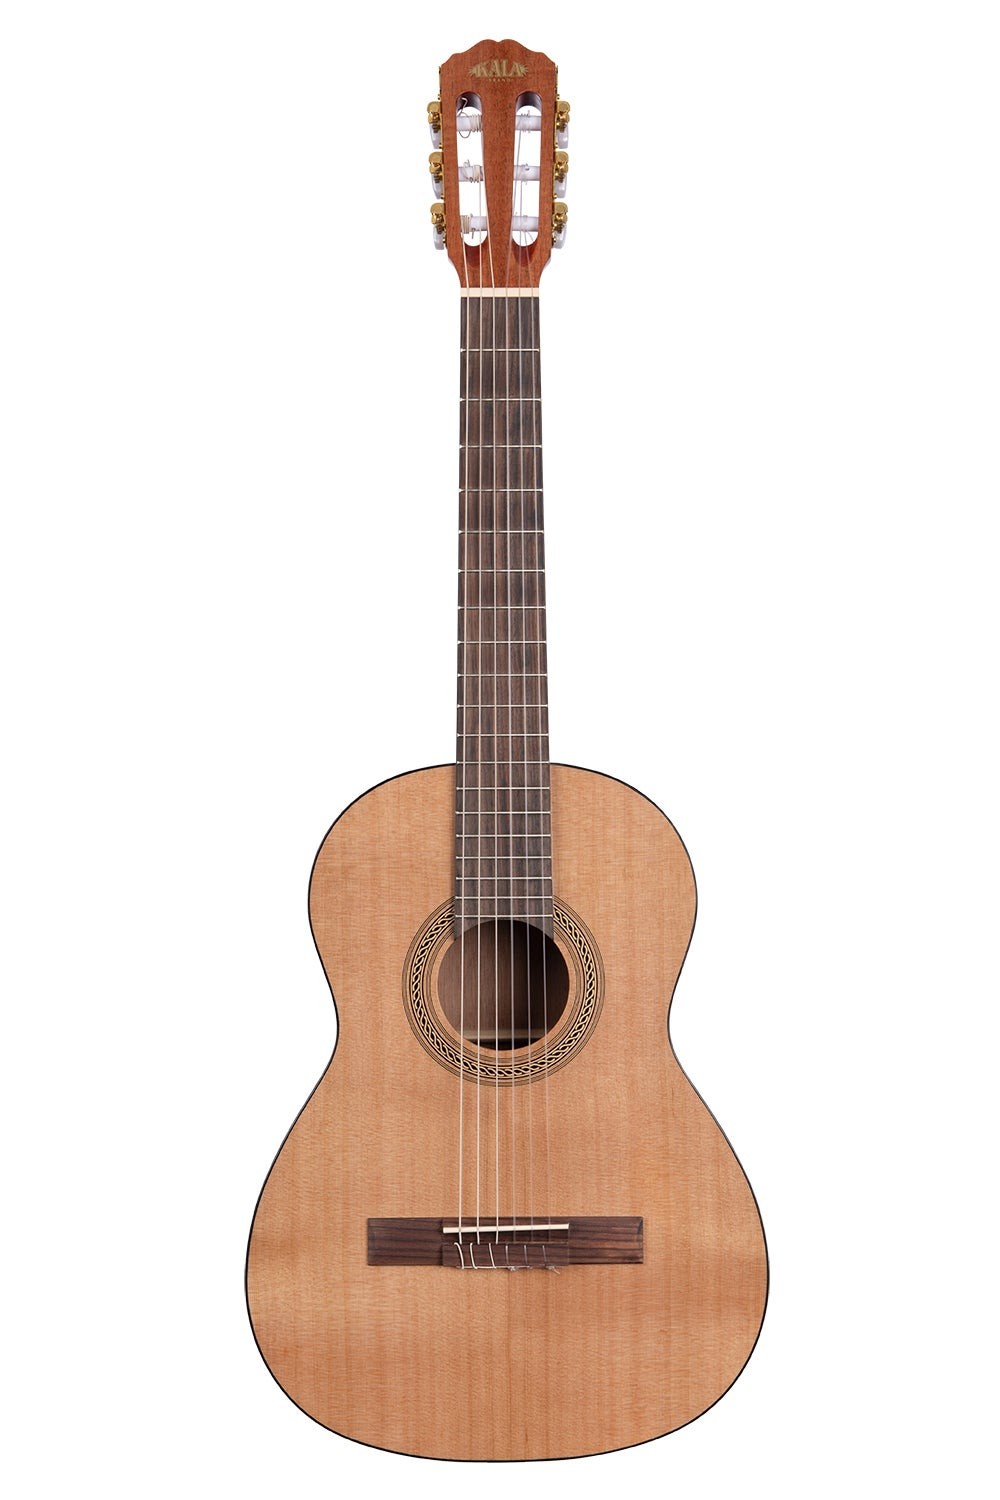 Cedar Top Mahogany Nylon String 3/4 Size Classical Guitar